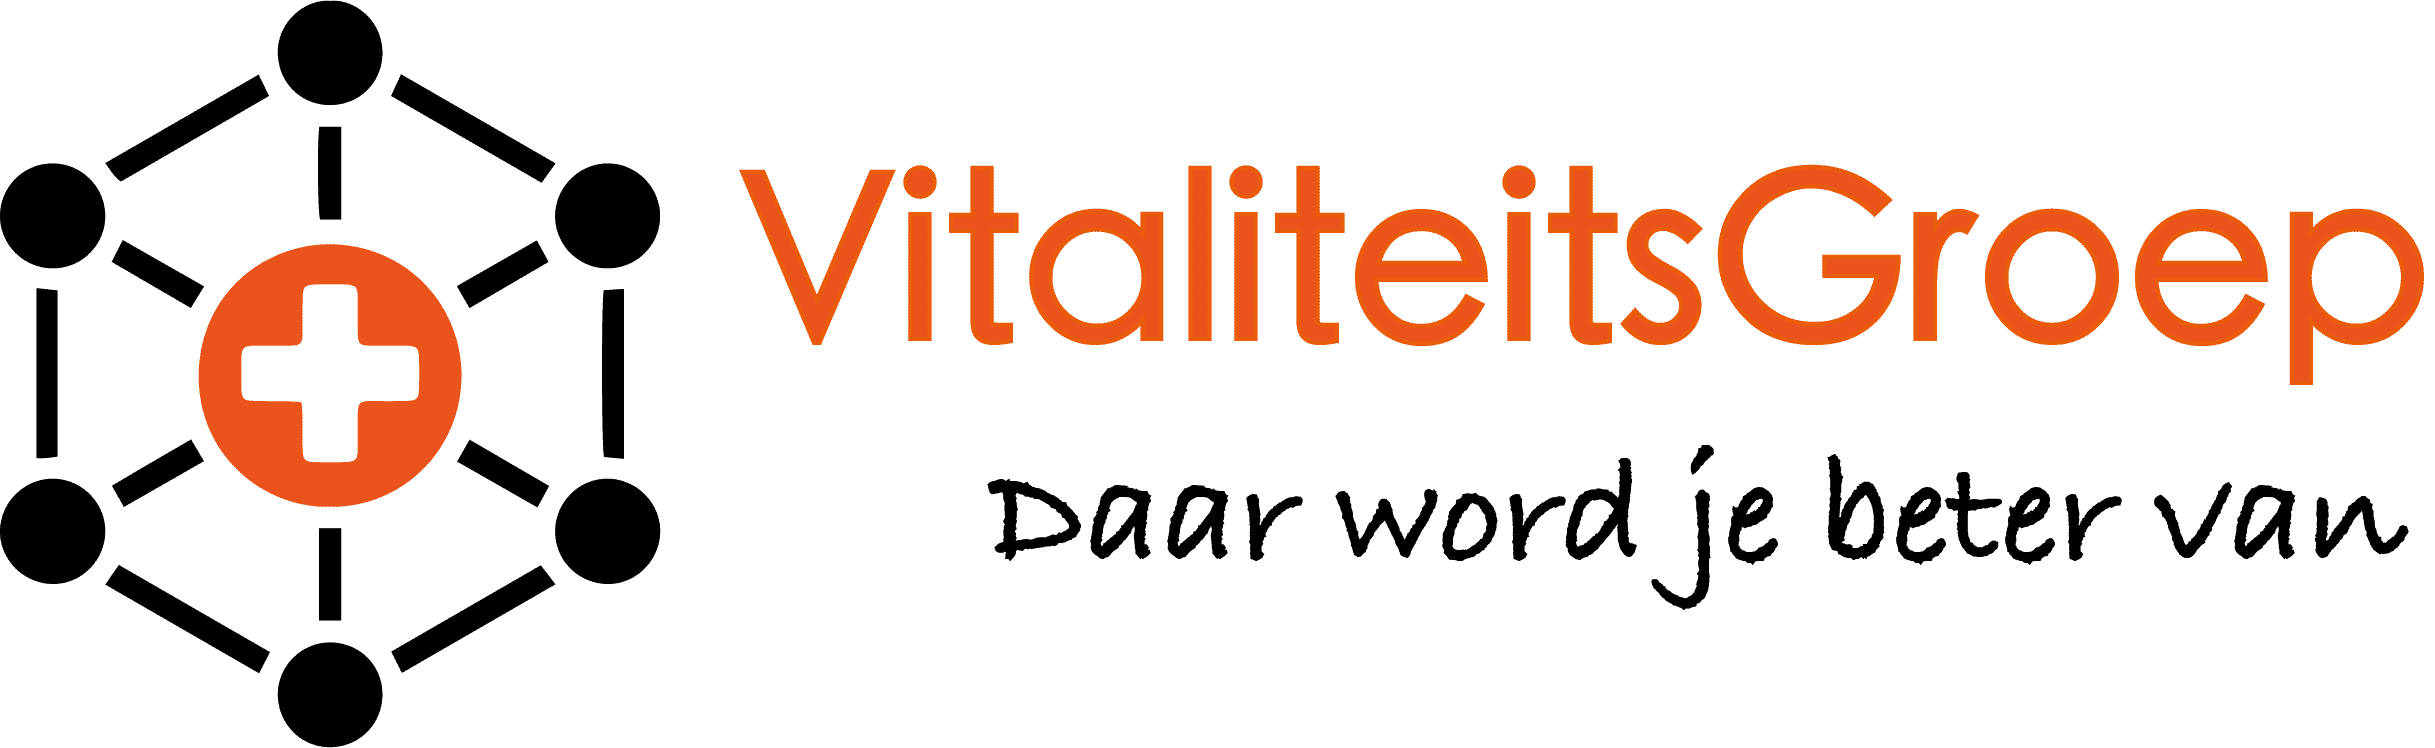 VitaliteitsGroep logo